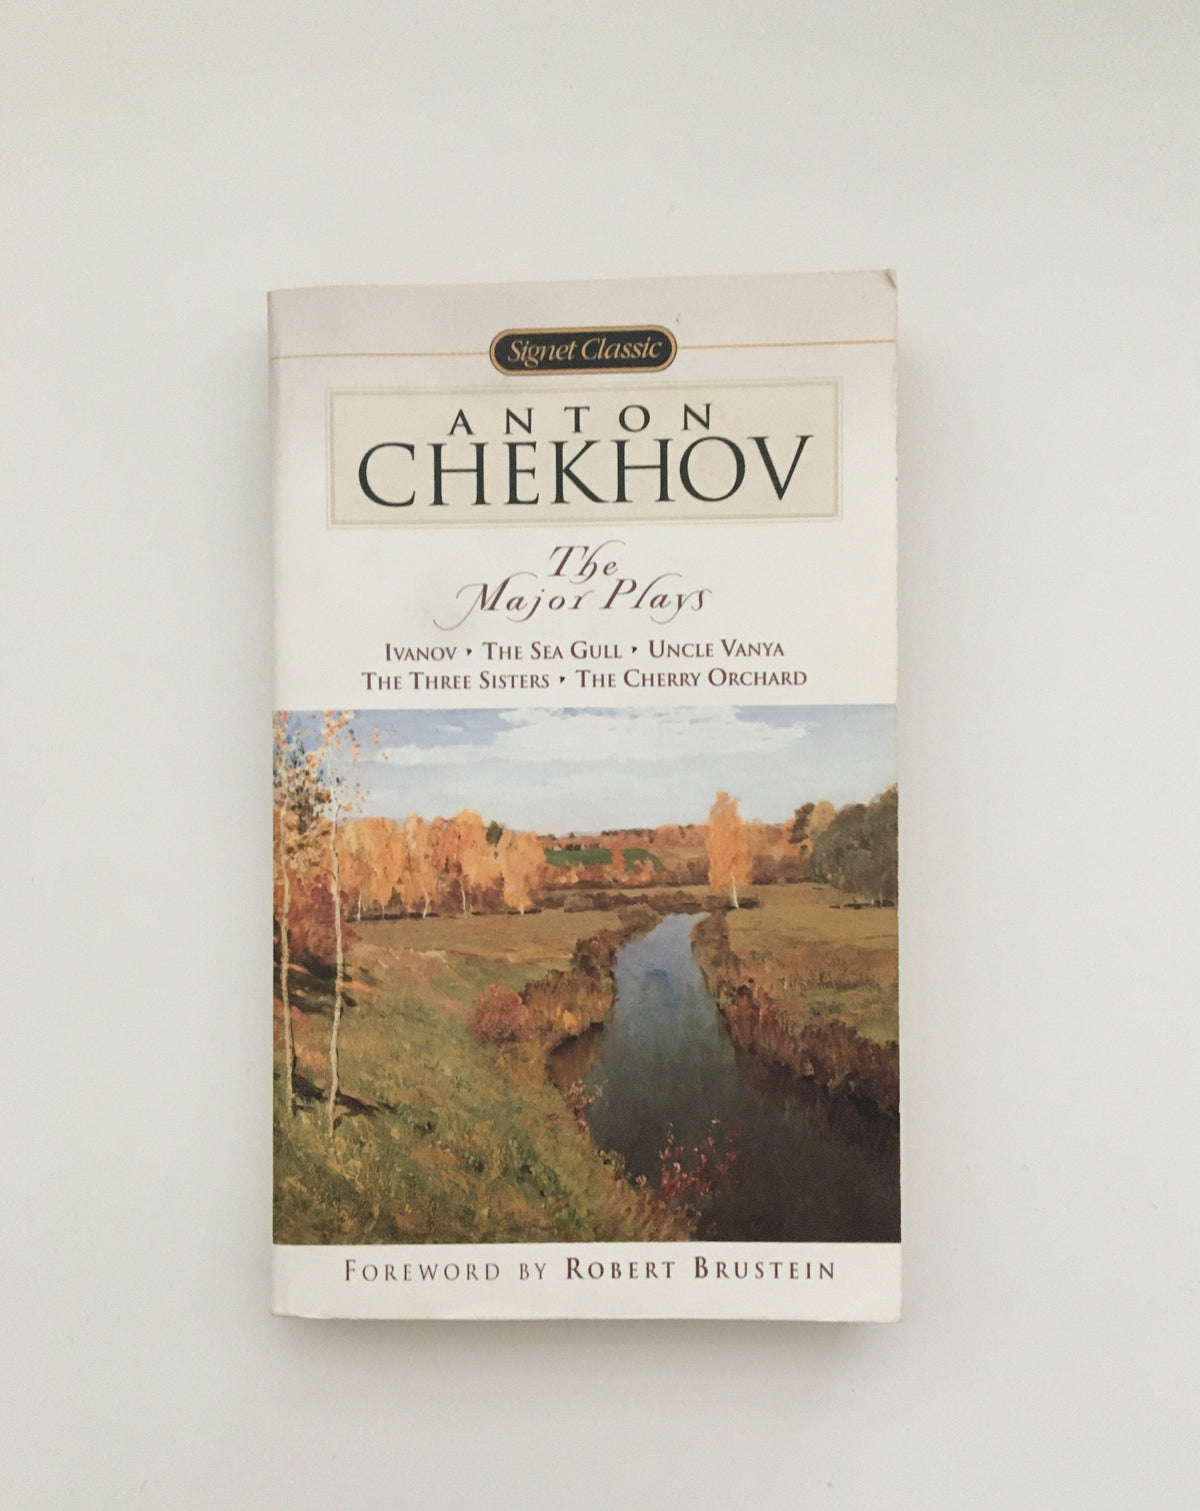 The Major Plays by Anton Chekhov